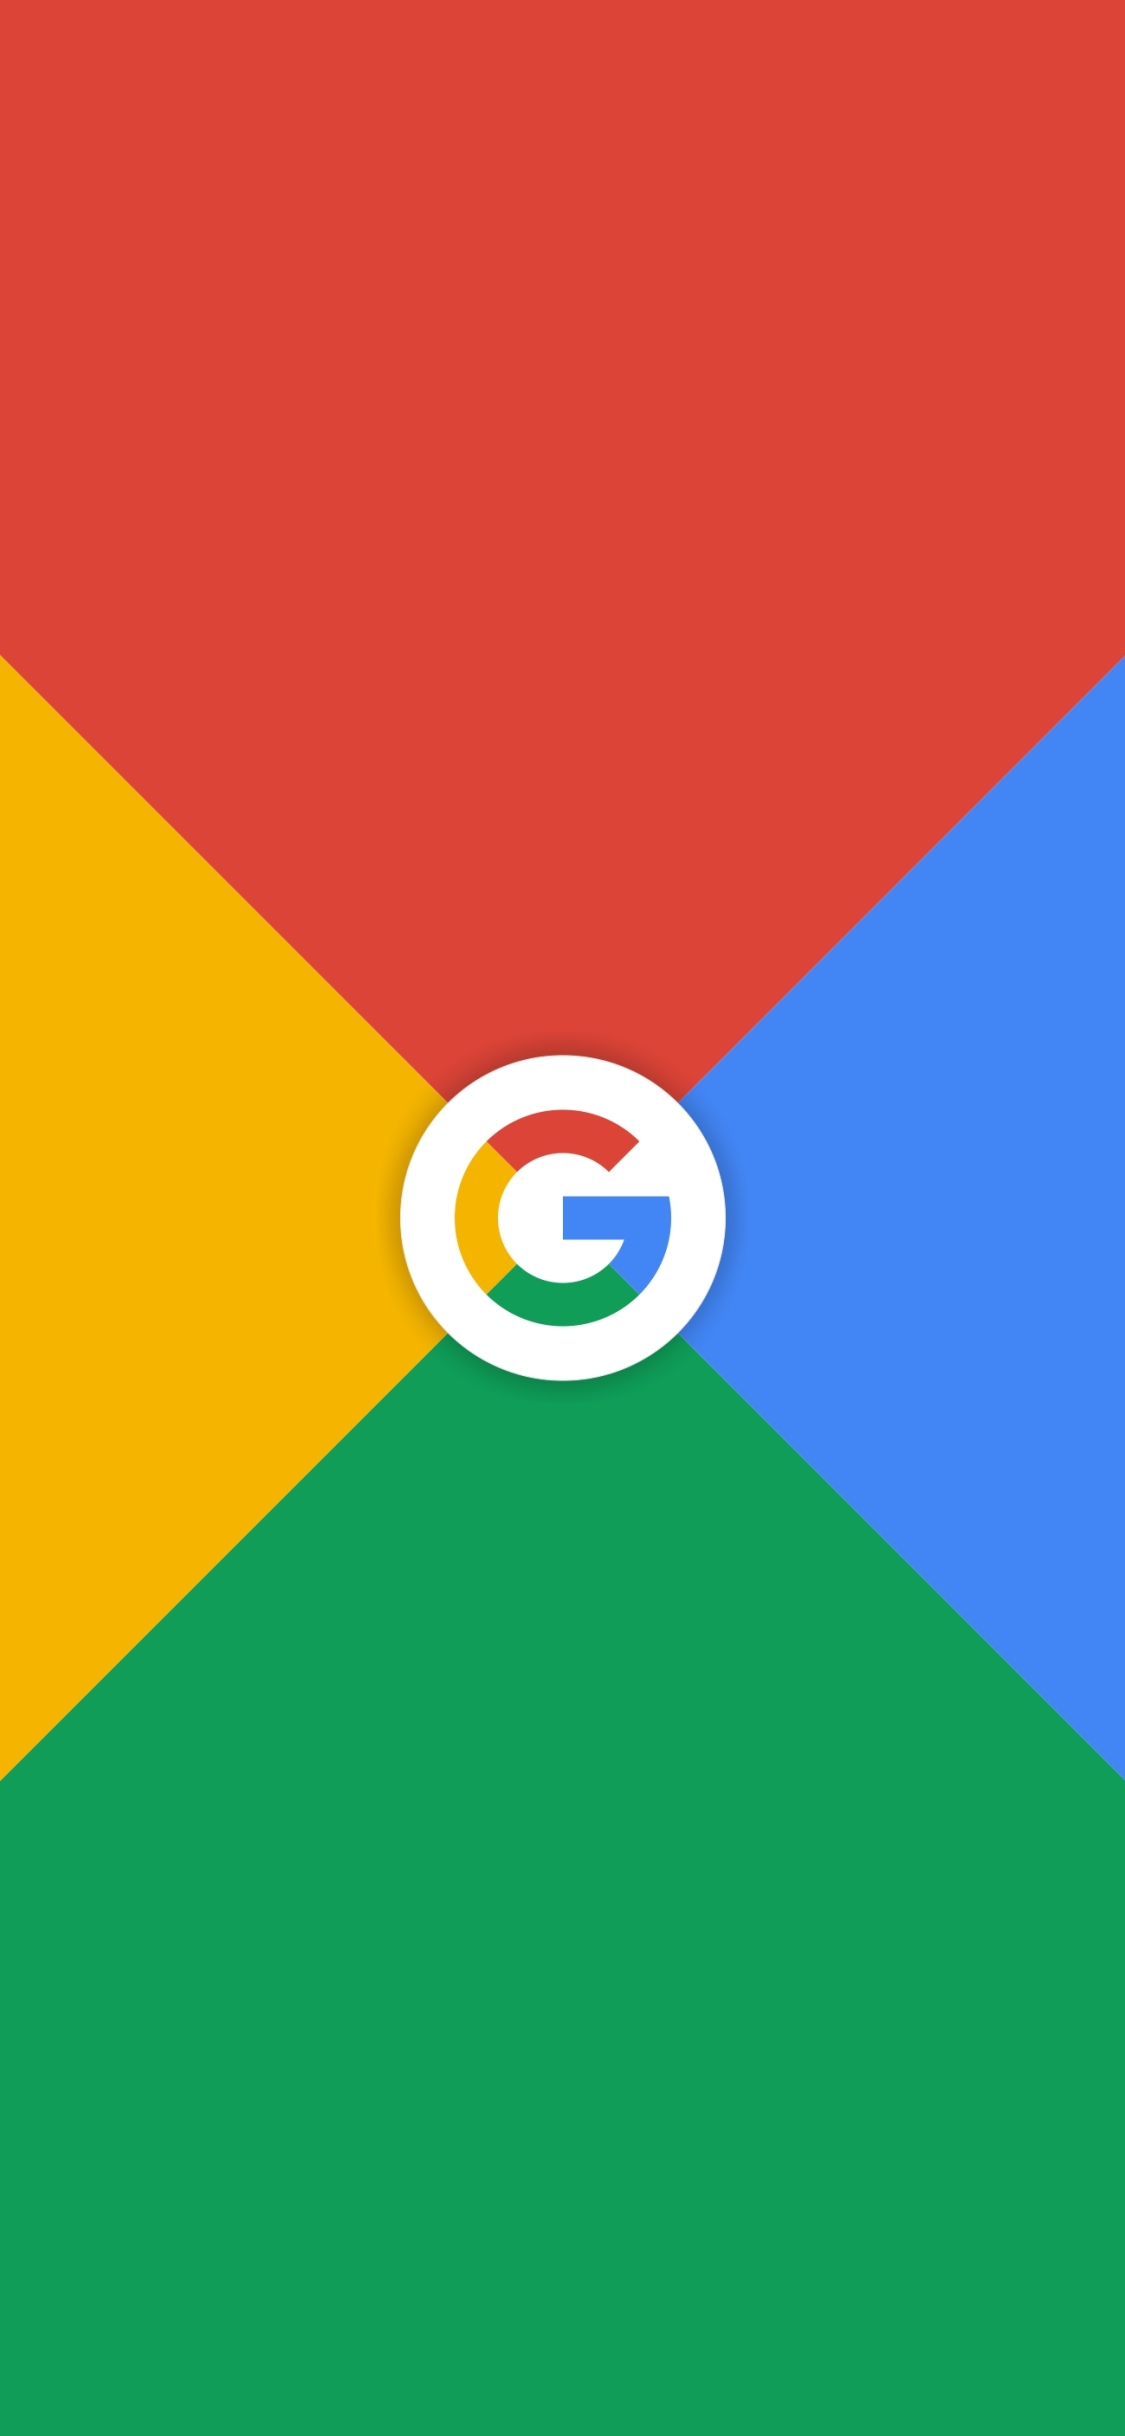  Google HQ Background Images